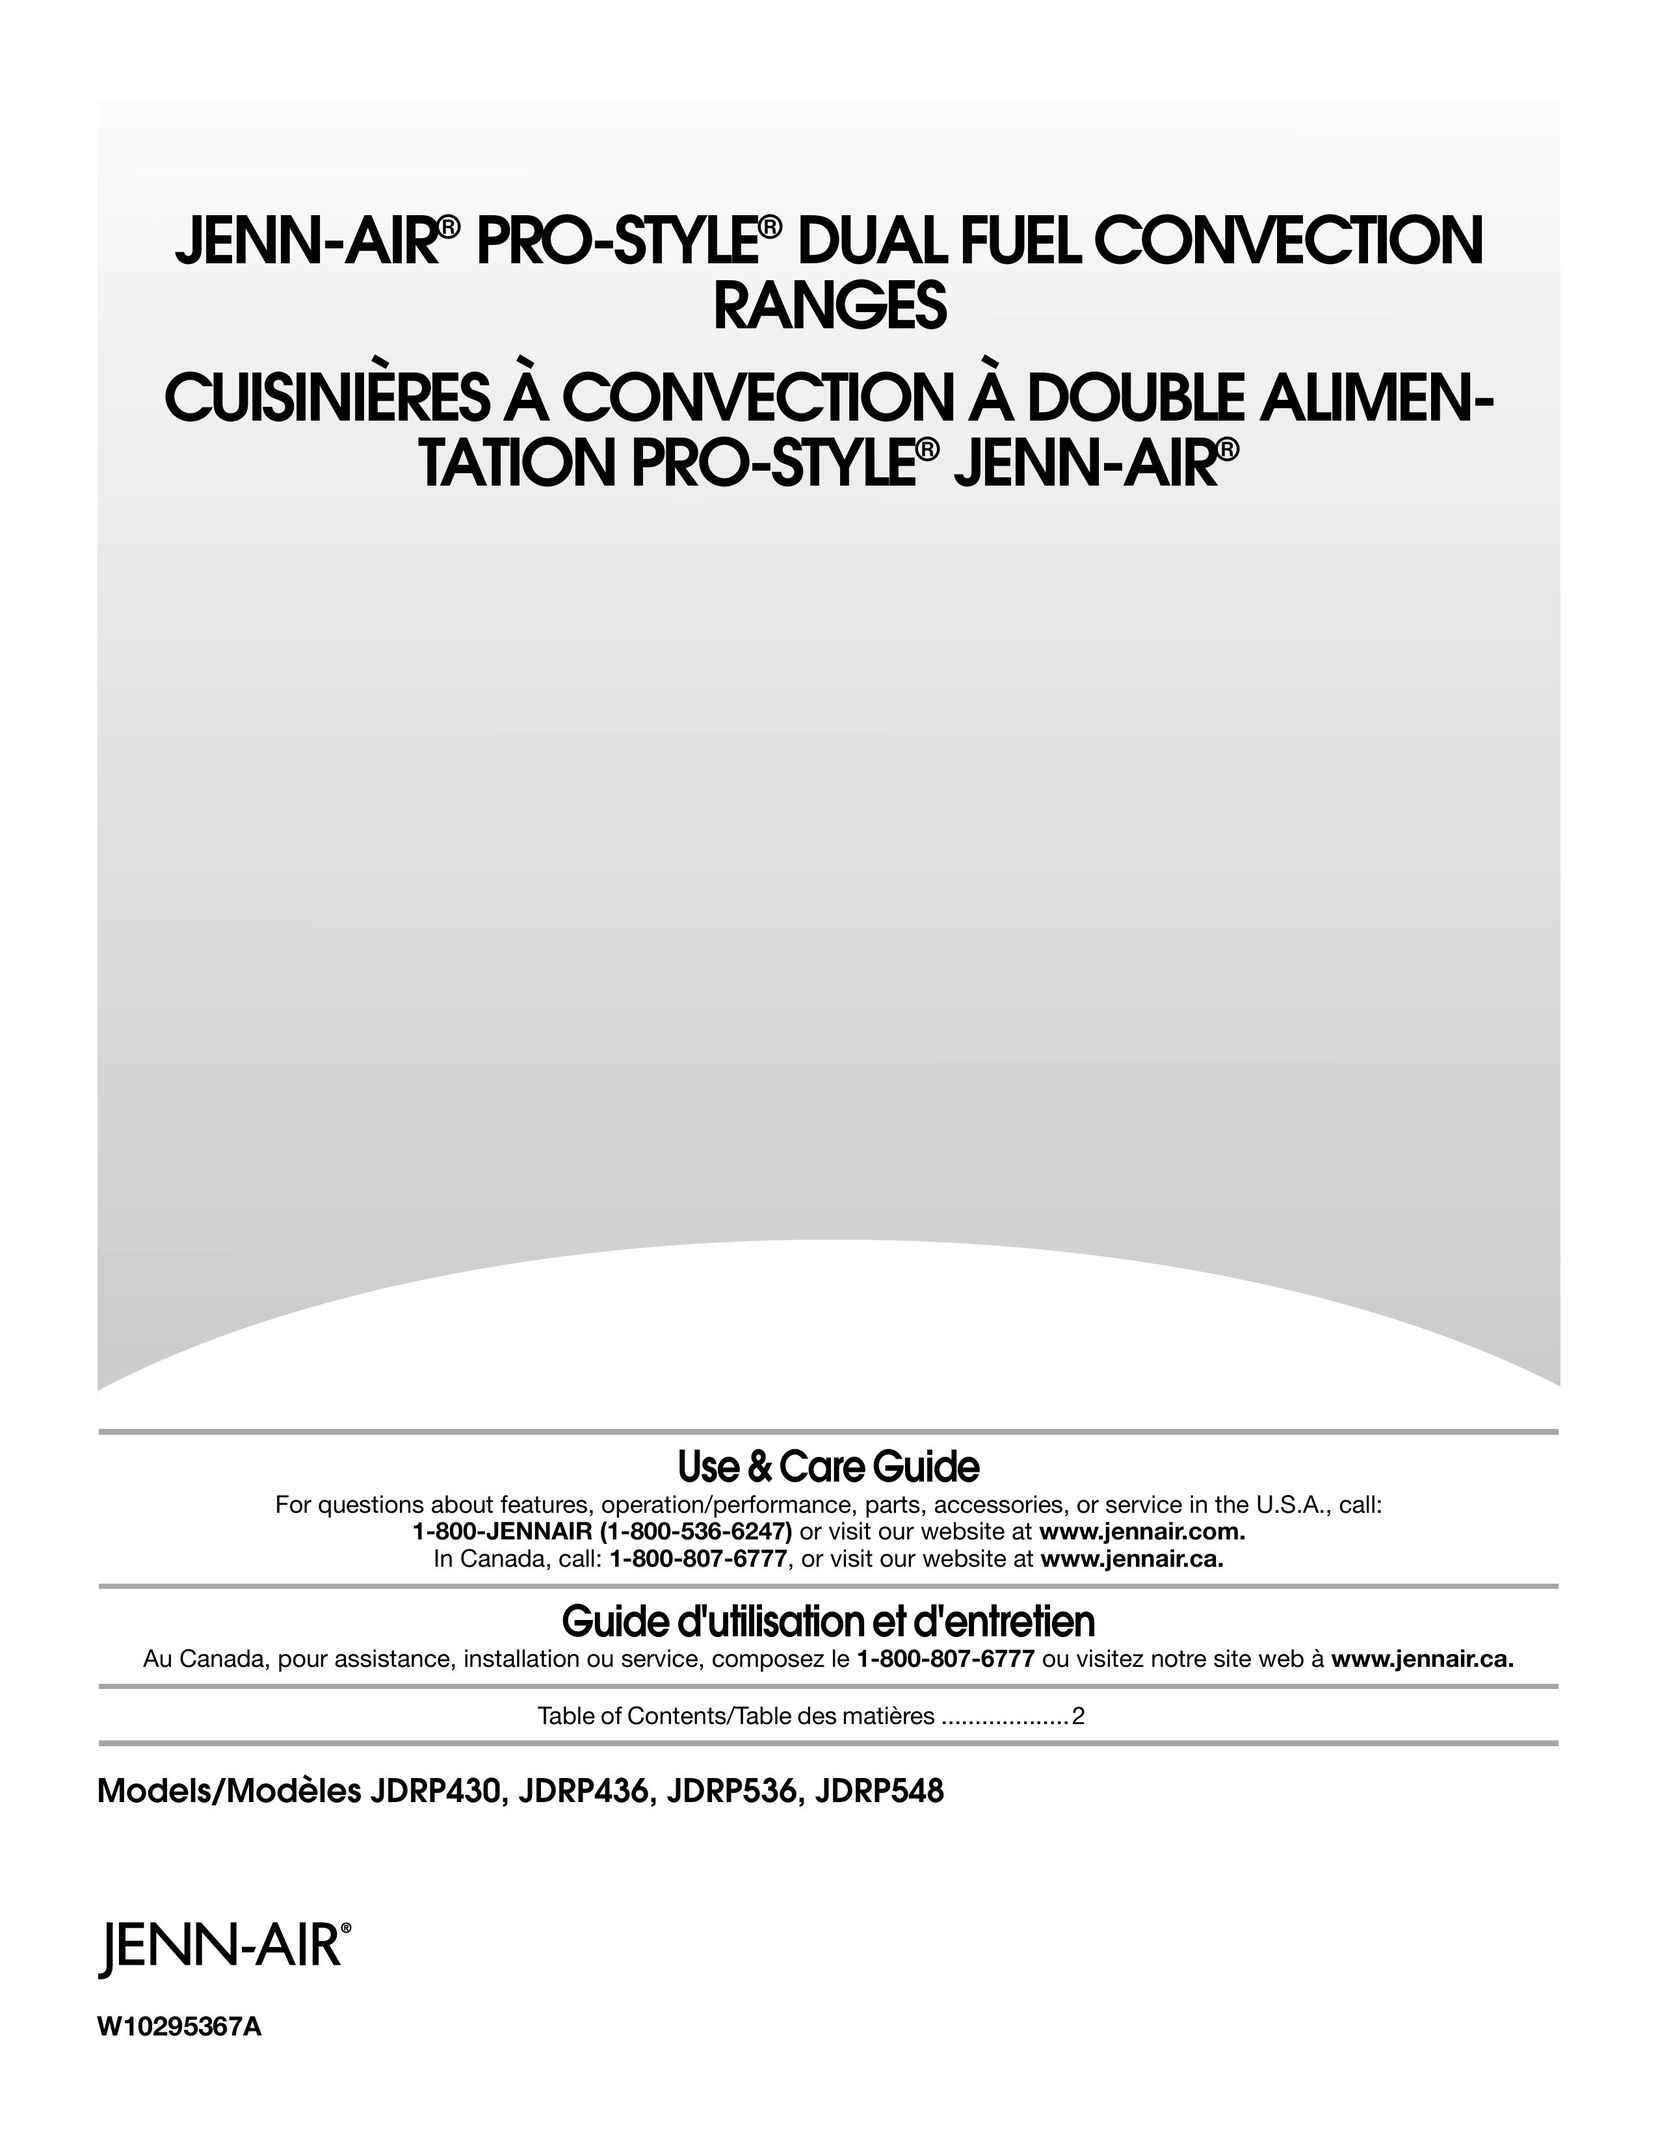 Jenn-Air JDRP436 Range User Manual